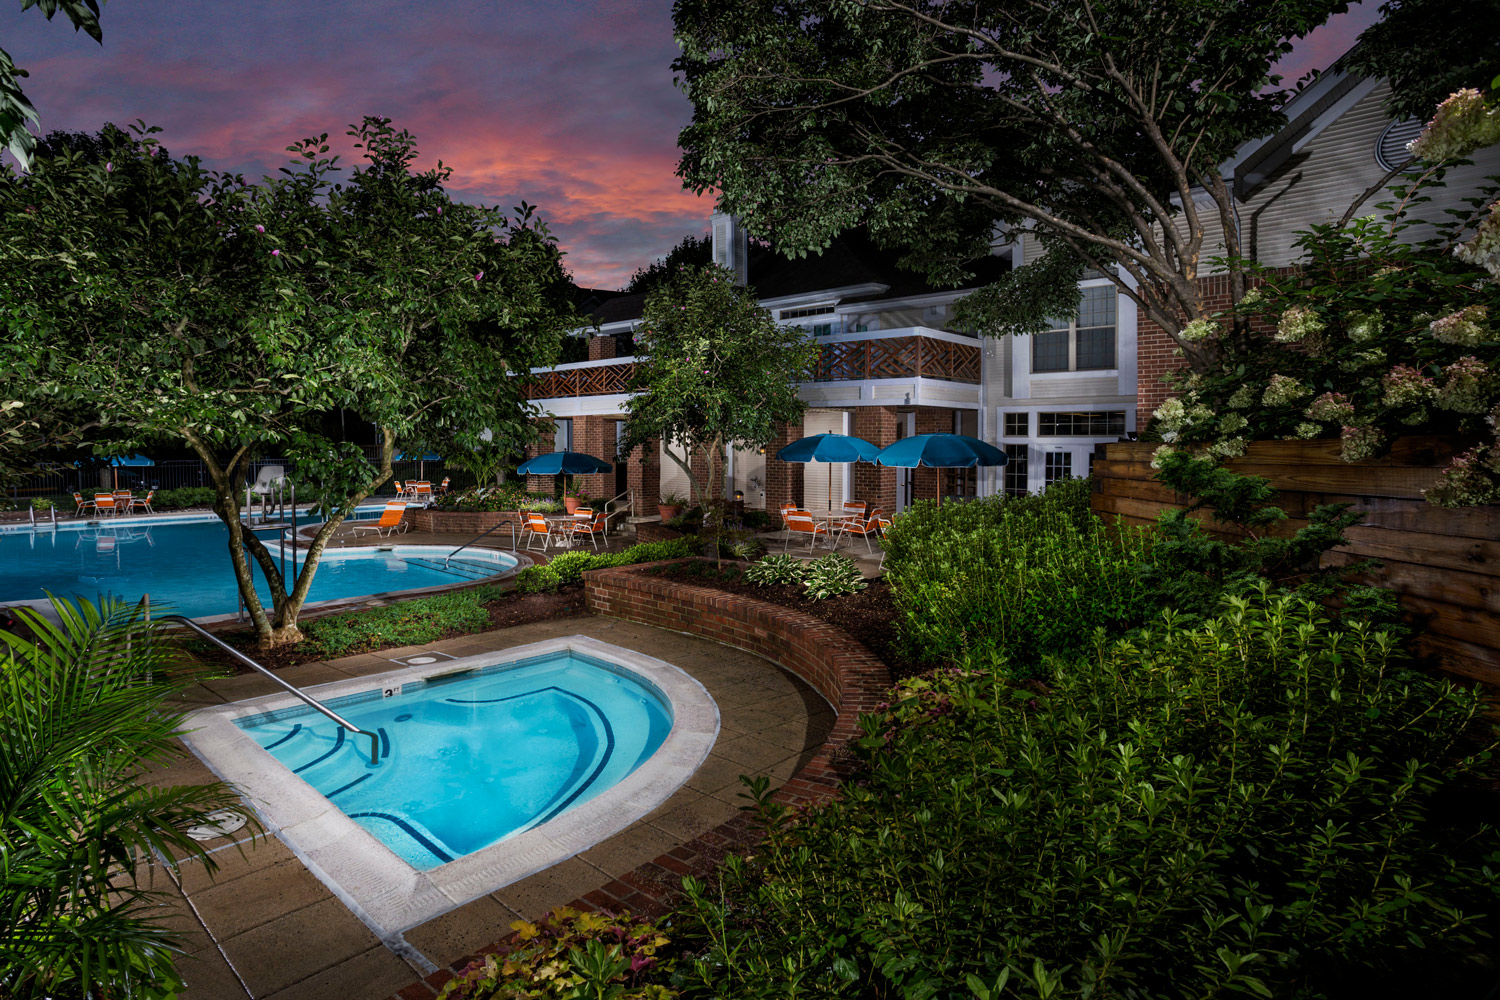 Relaxing swimming pool & whirlpool spa at Seneca Club Apartments in Germantown, MD